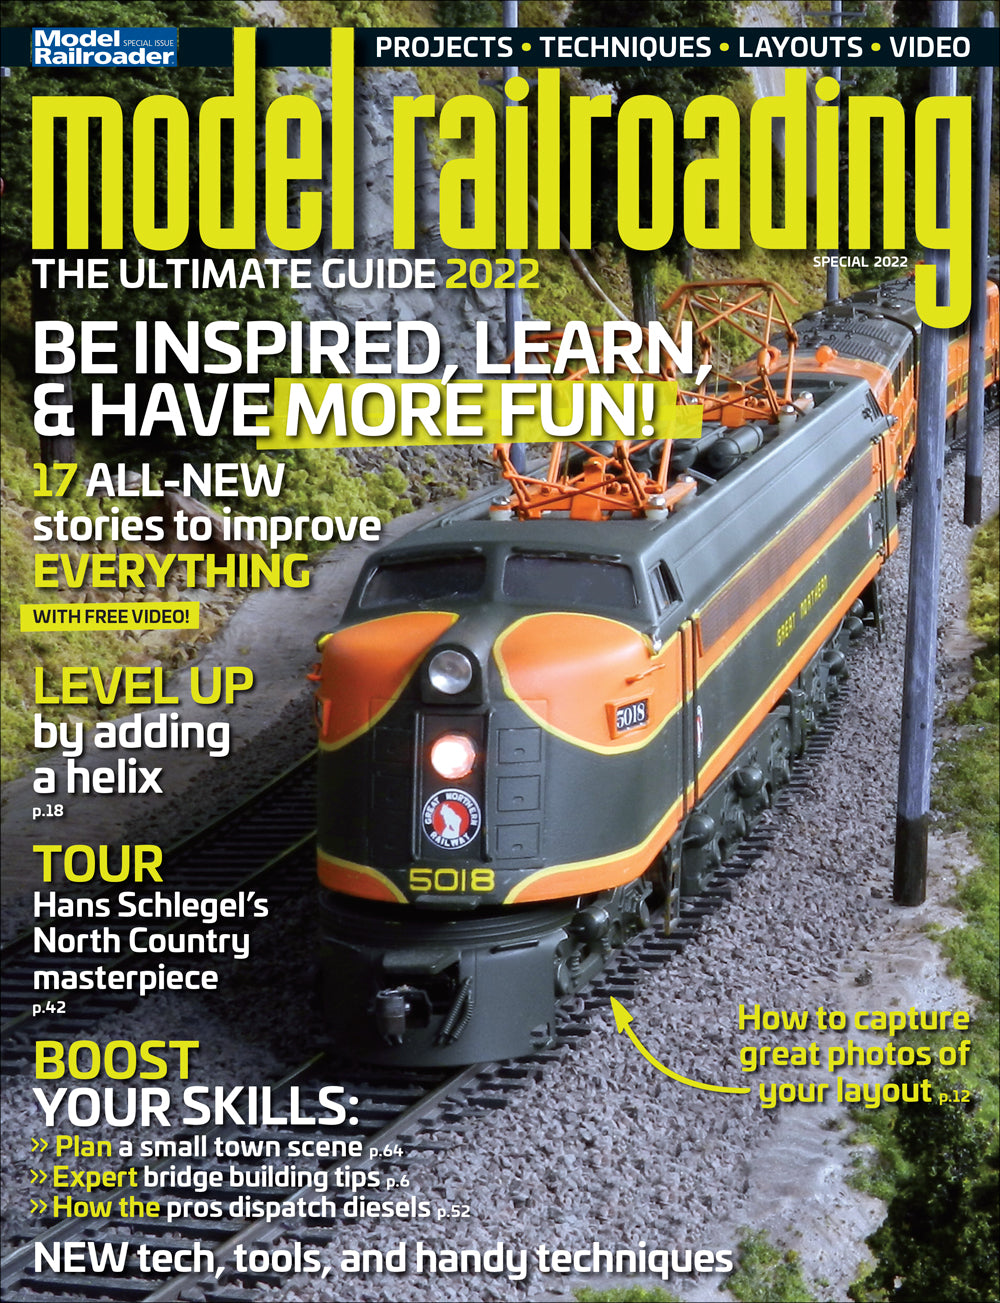 Model Railroader - Magazine - The Ultimate Guide 2022 - Special 2022